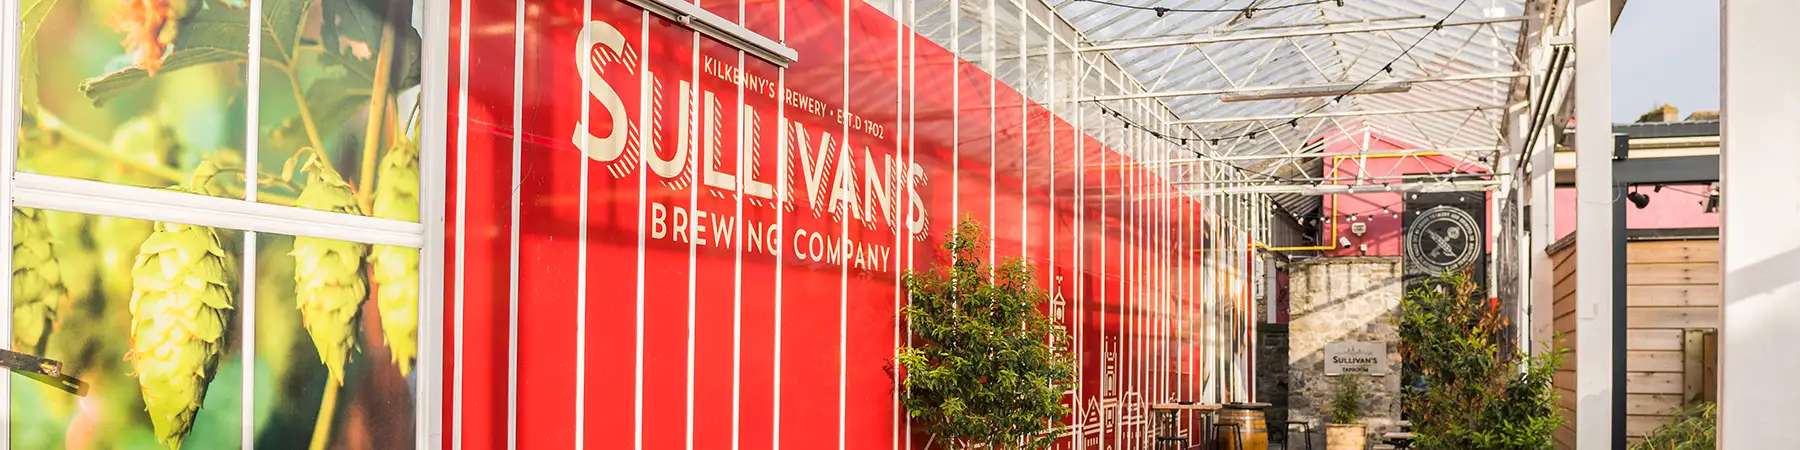 sullivans brewery beer garden